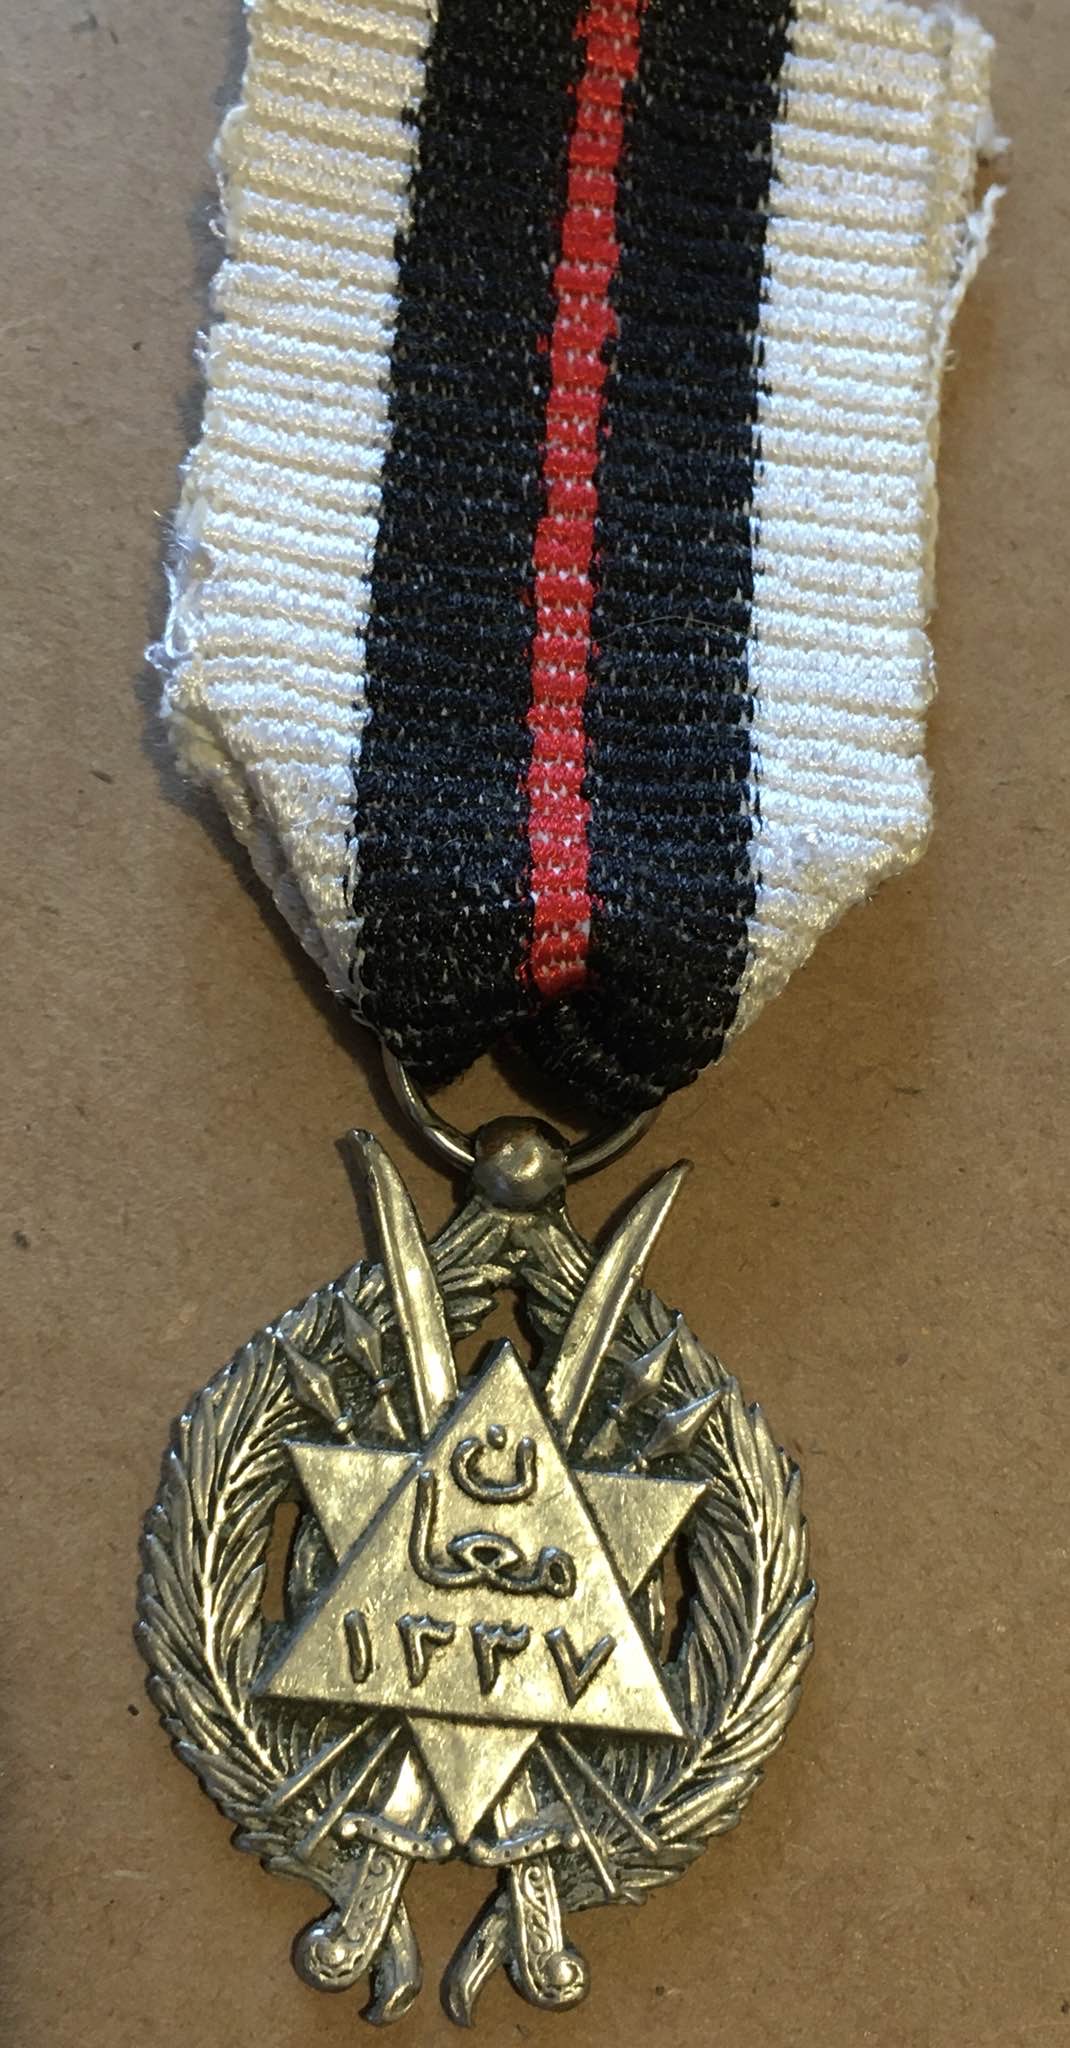 1337 TransJordan Ma’an Medal Badge Nichan Hussein Bin Ali Ultra Rare وسام معان